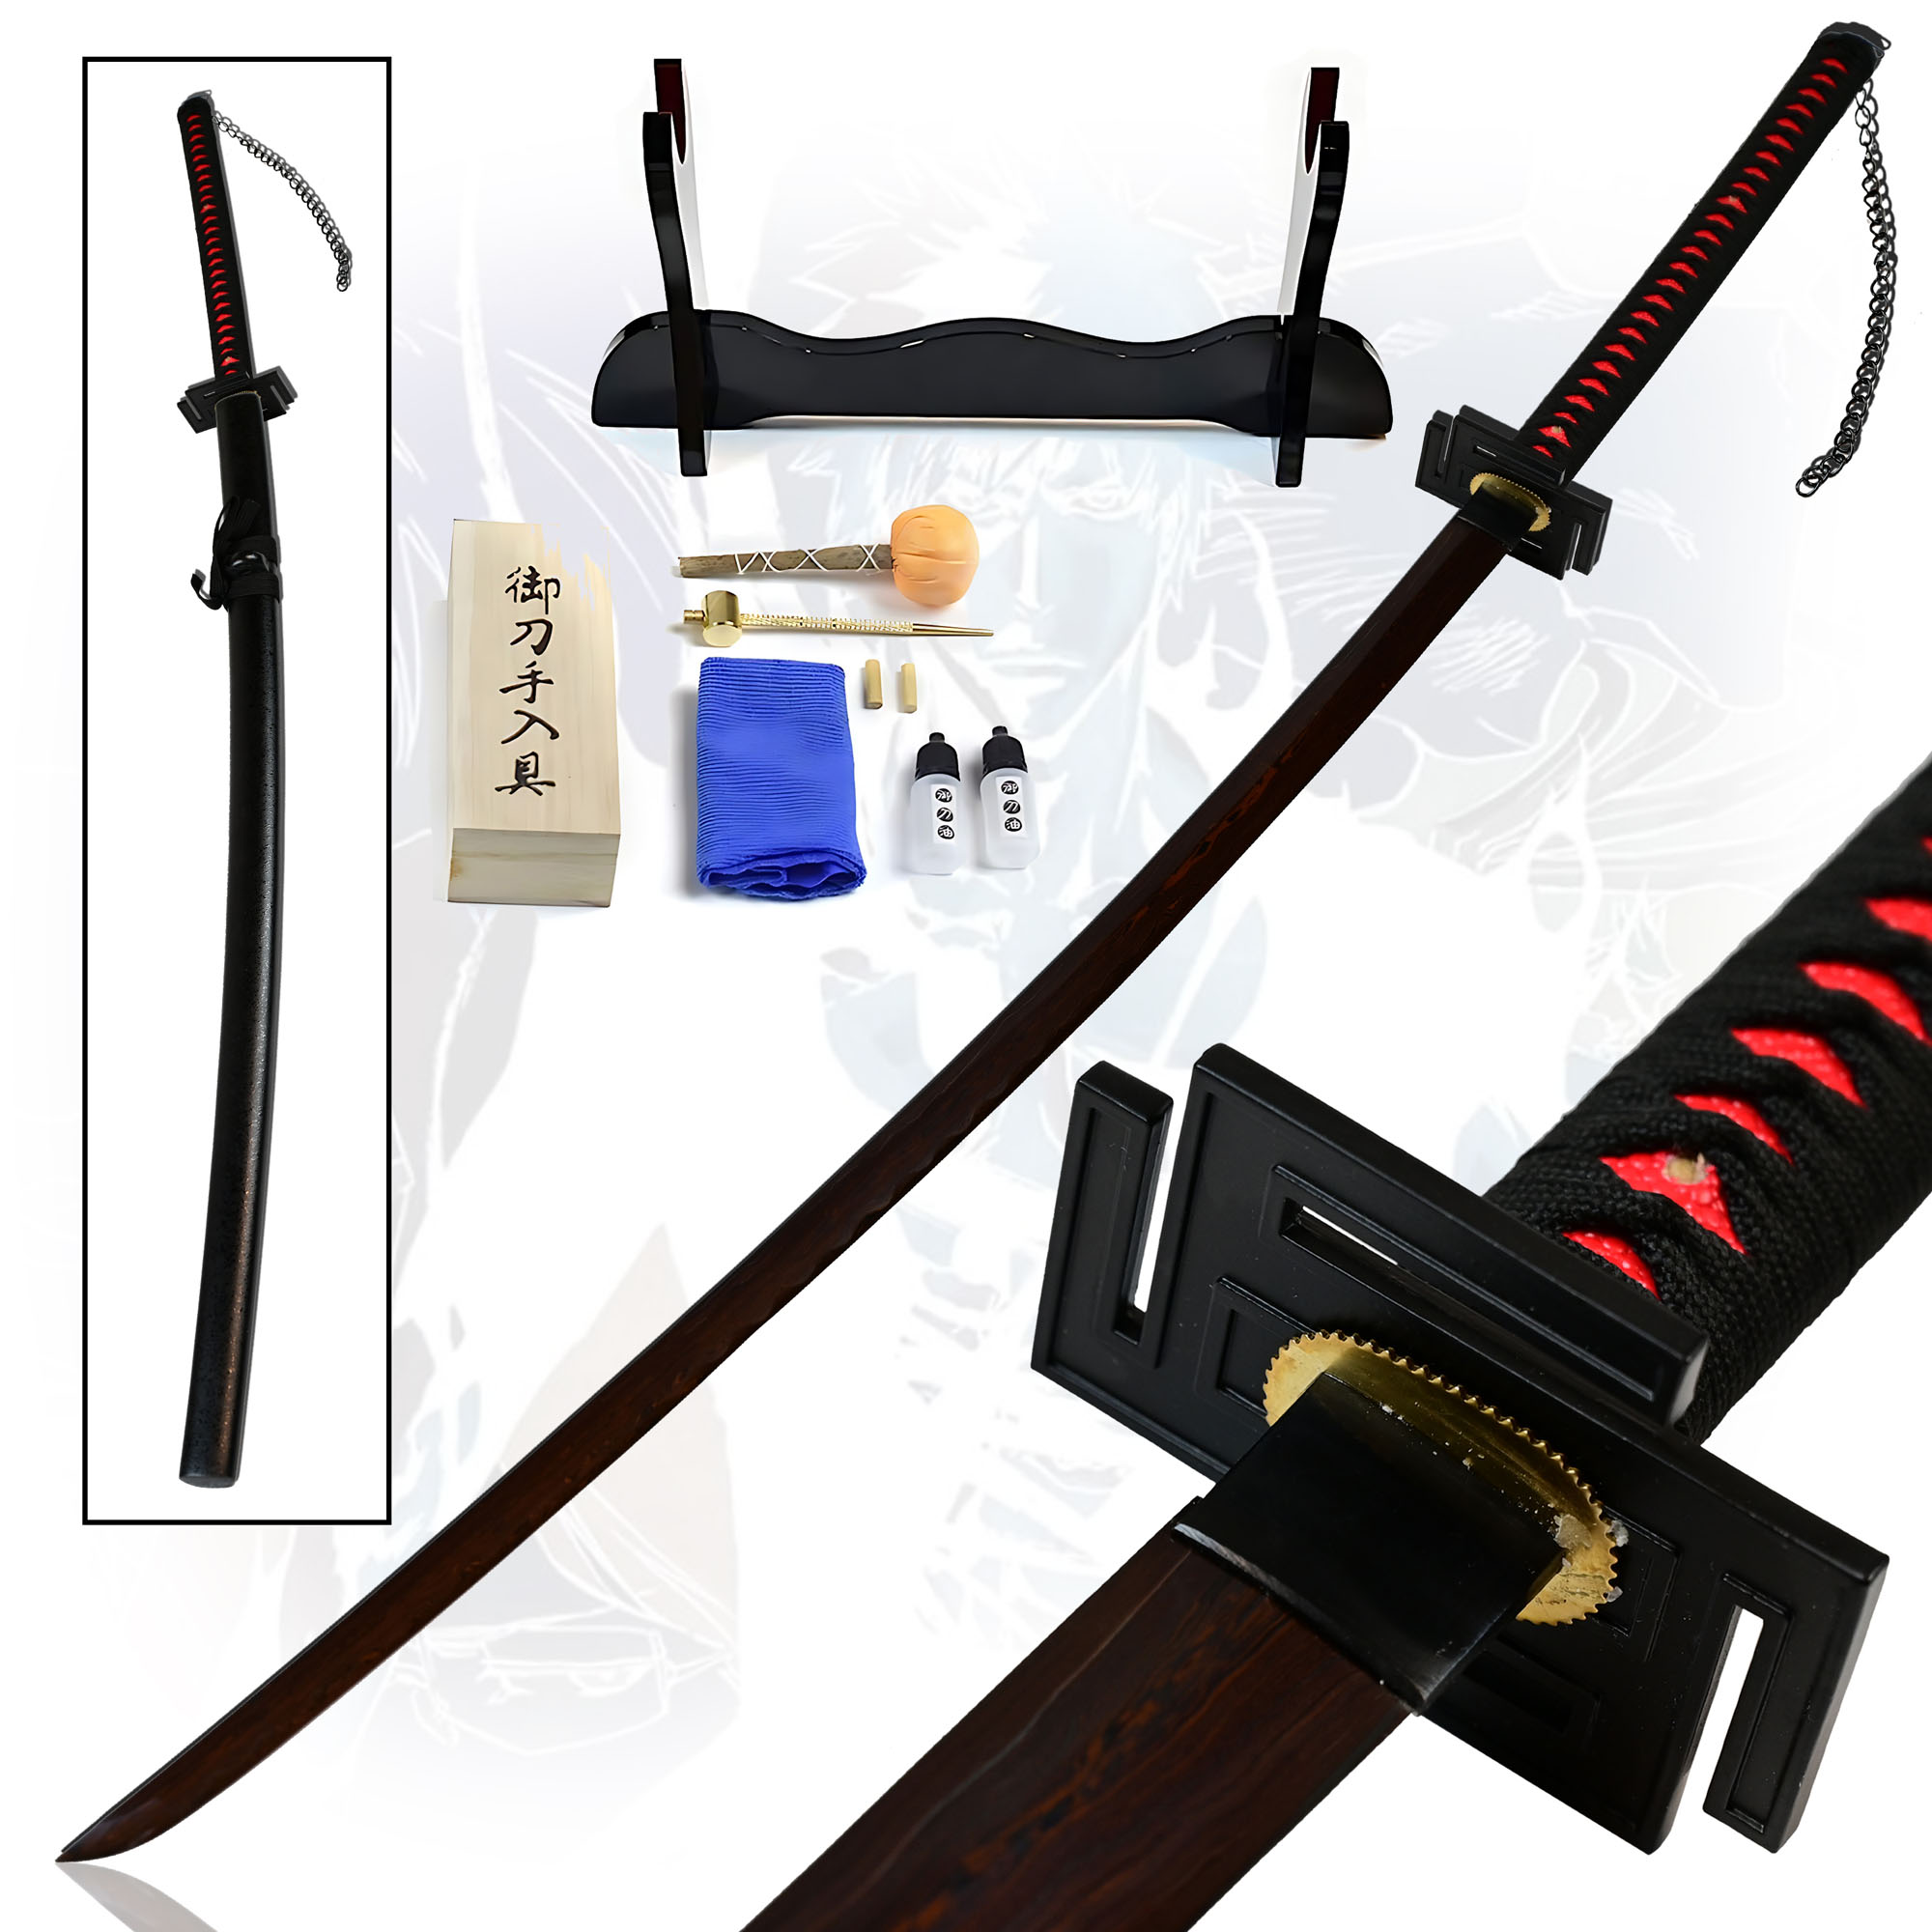 Bleach - Ichigo Kurosaki Sword - handforged and folded, set